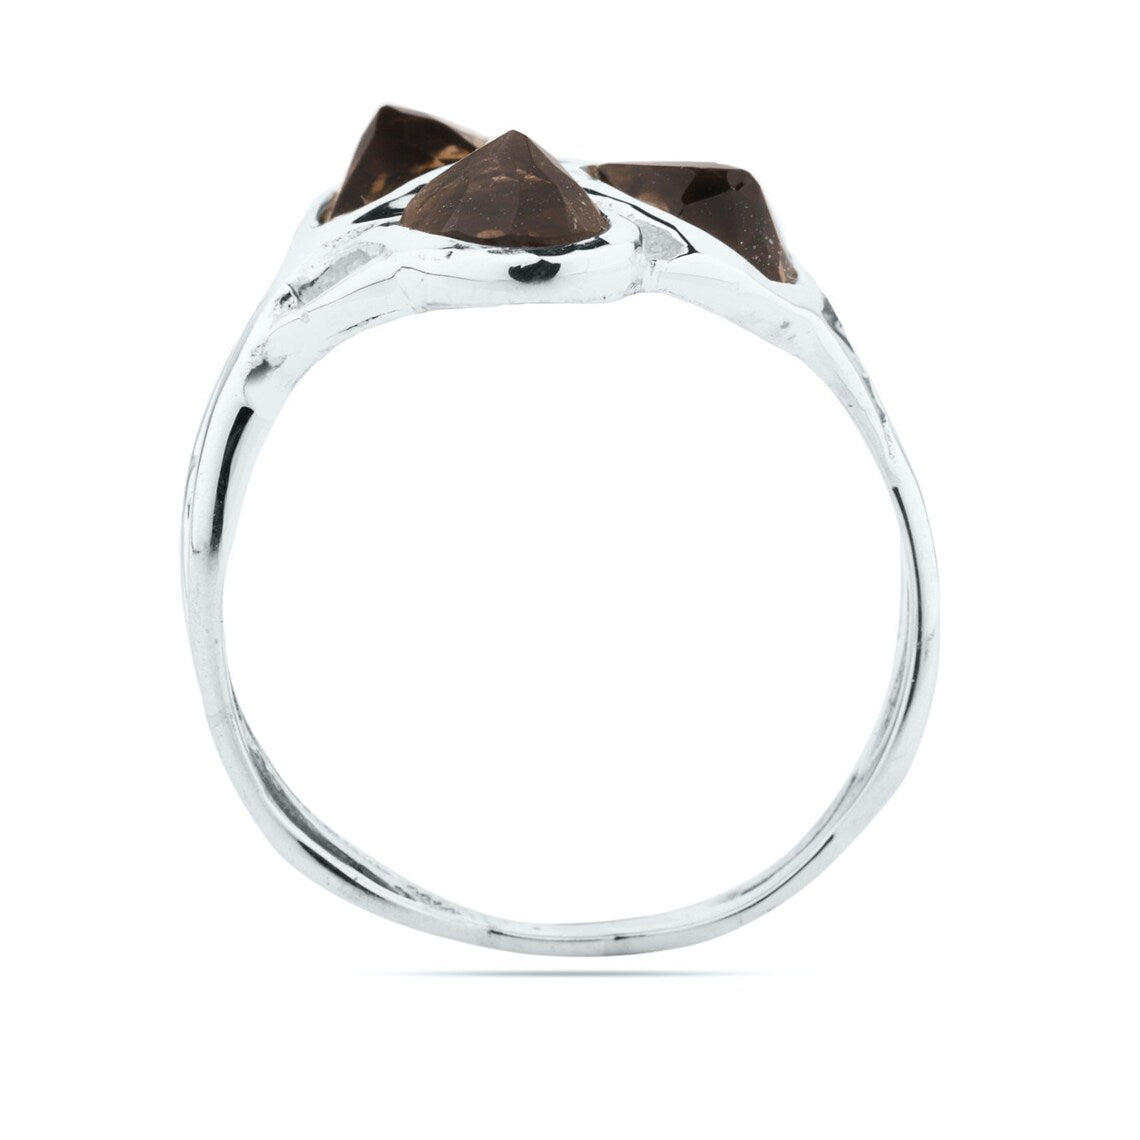 Natural Smoky Quartz Ring-Handmade Silver Ring-925 Sterling Silver Ring-Designer Teardrop Smoky Ring-Gift for her-Capricorn Birthstone